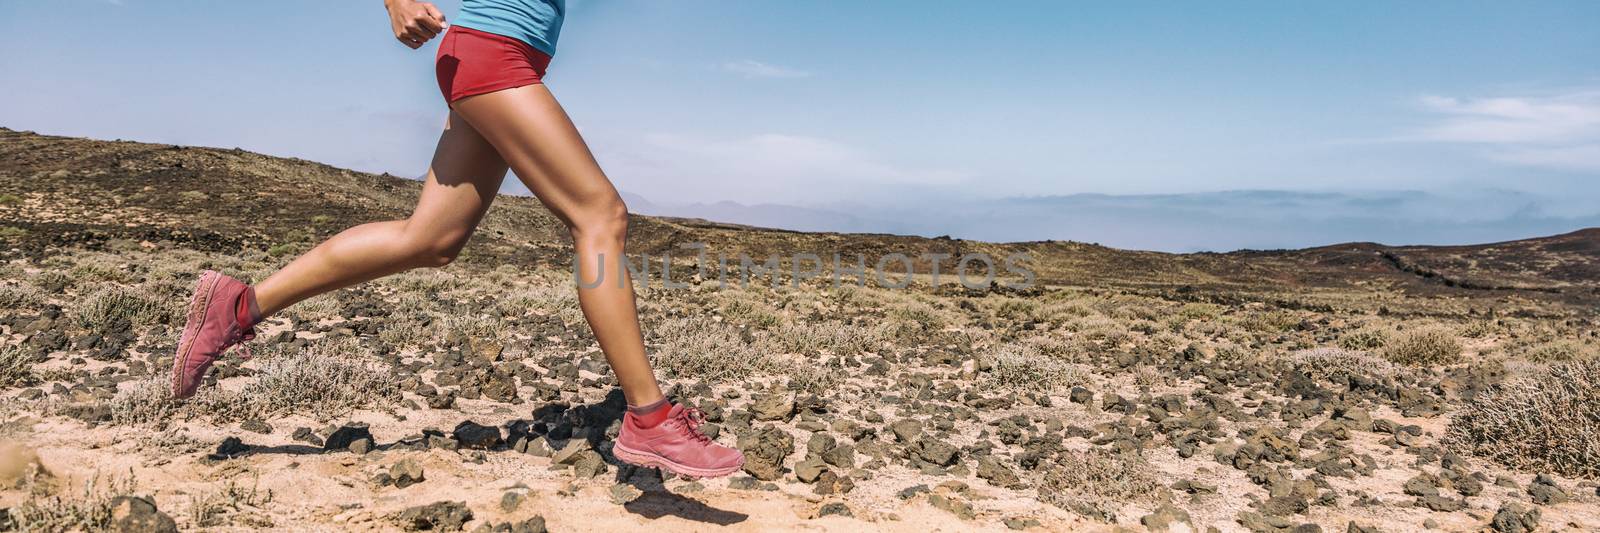 Sport exercise fitness female athlete runner running on trail run race in desert panorama banner. Closeup of legs and running shoes by Maridav